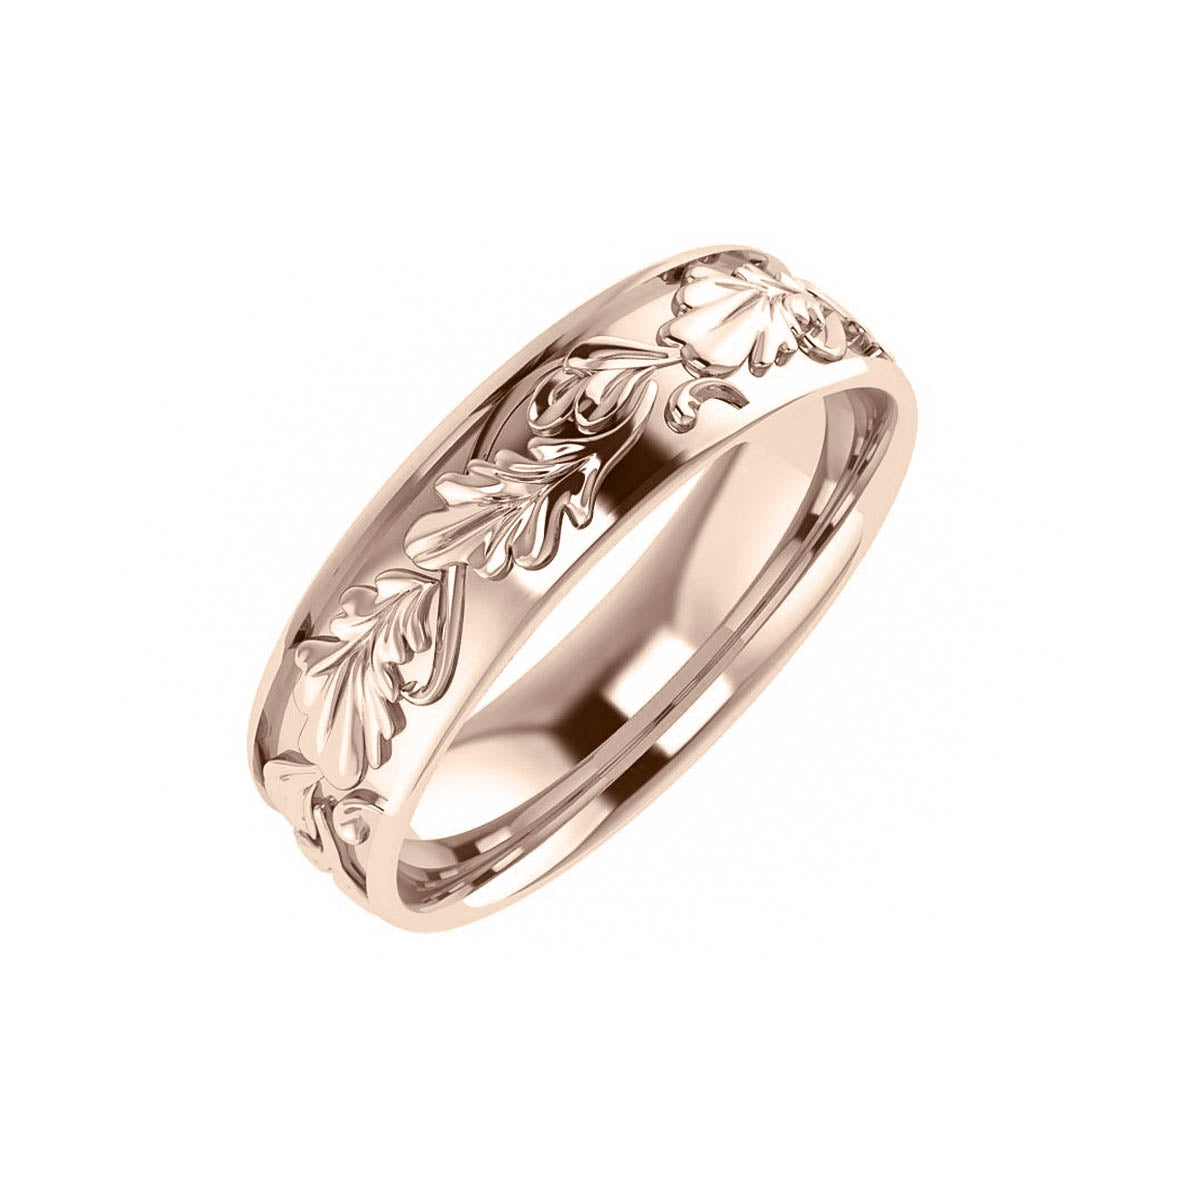 Man wedding band, matching oak leaf ring - Eden Garden Jewelry™